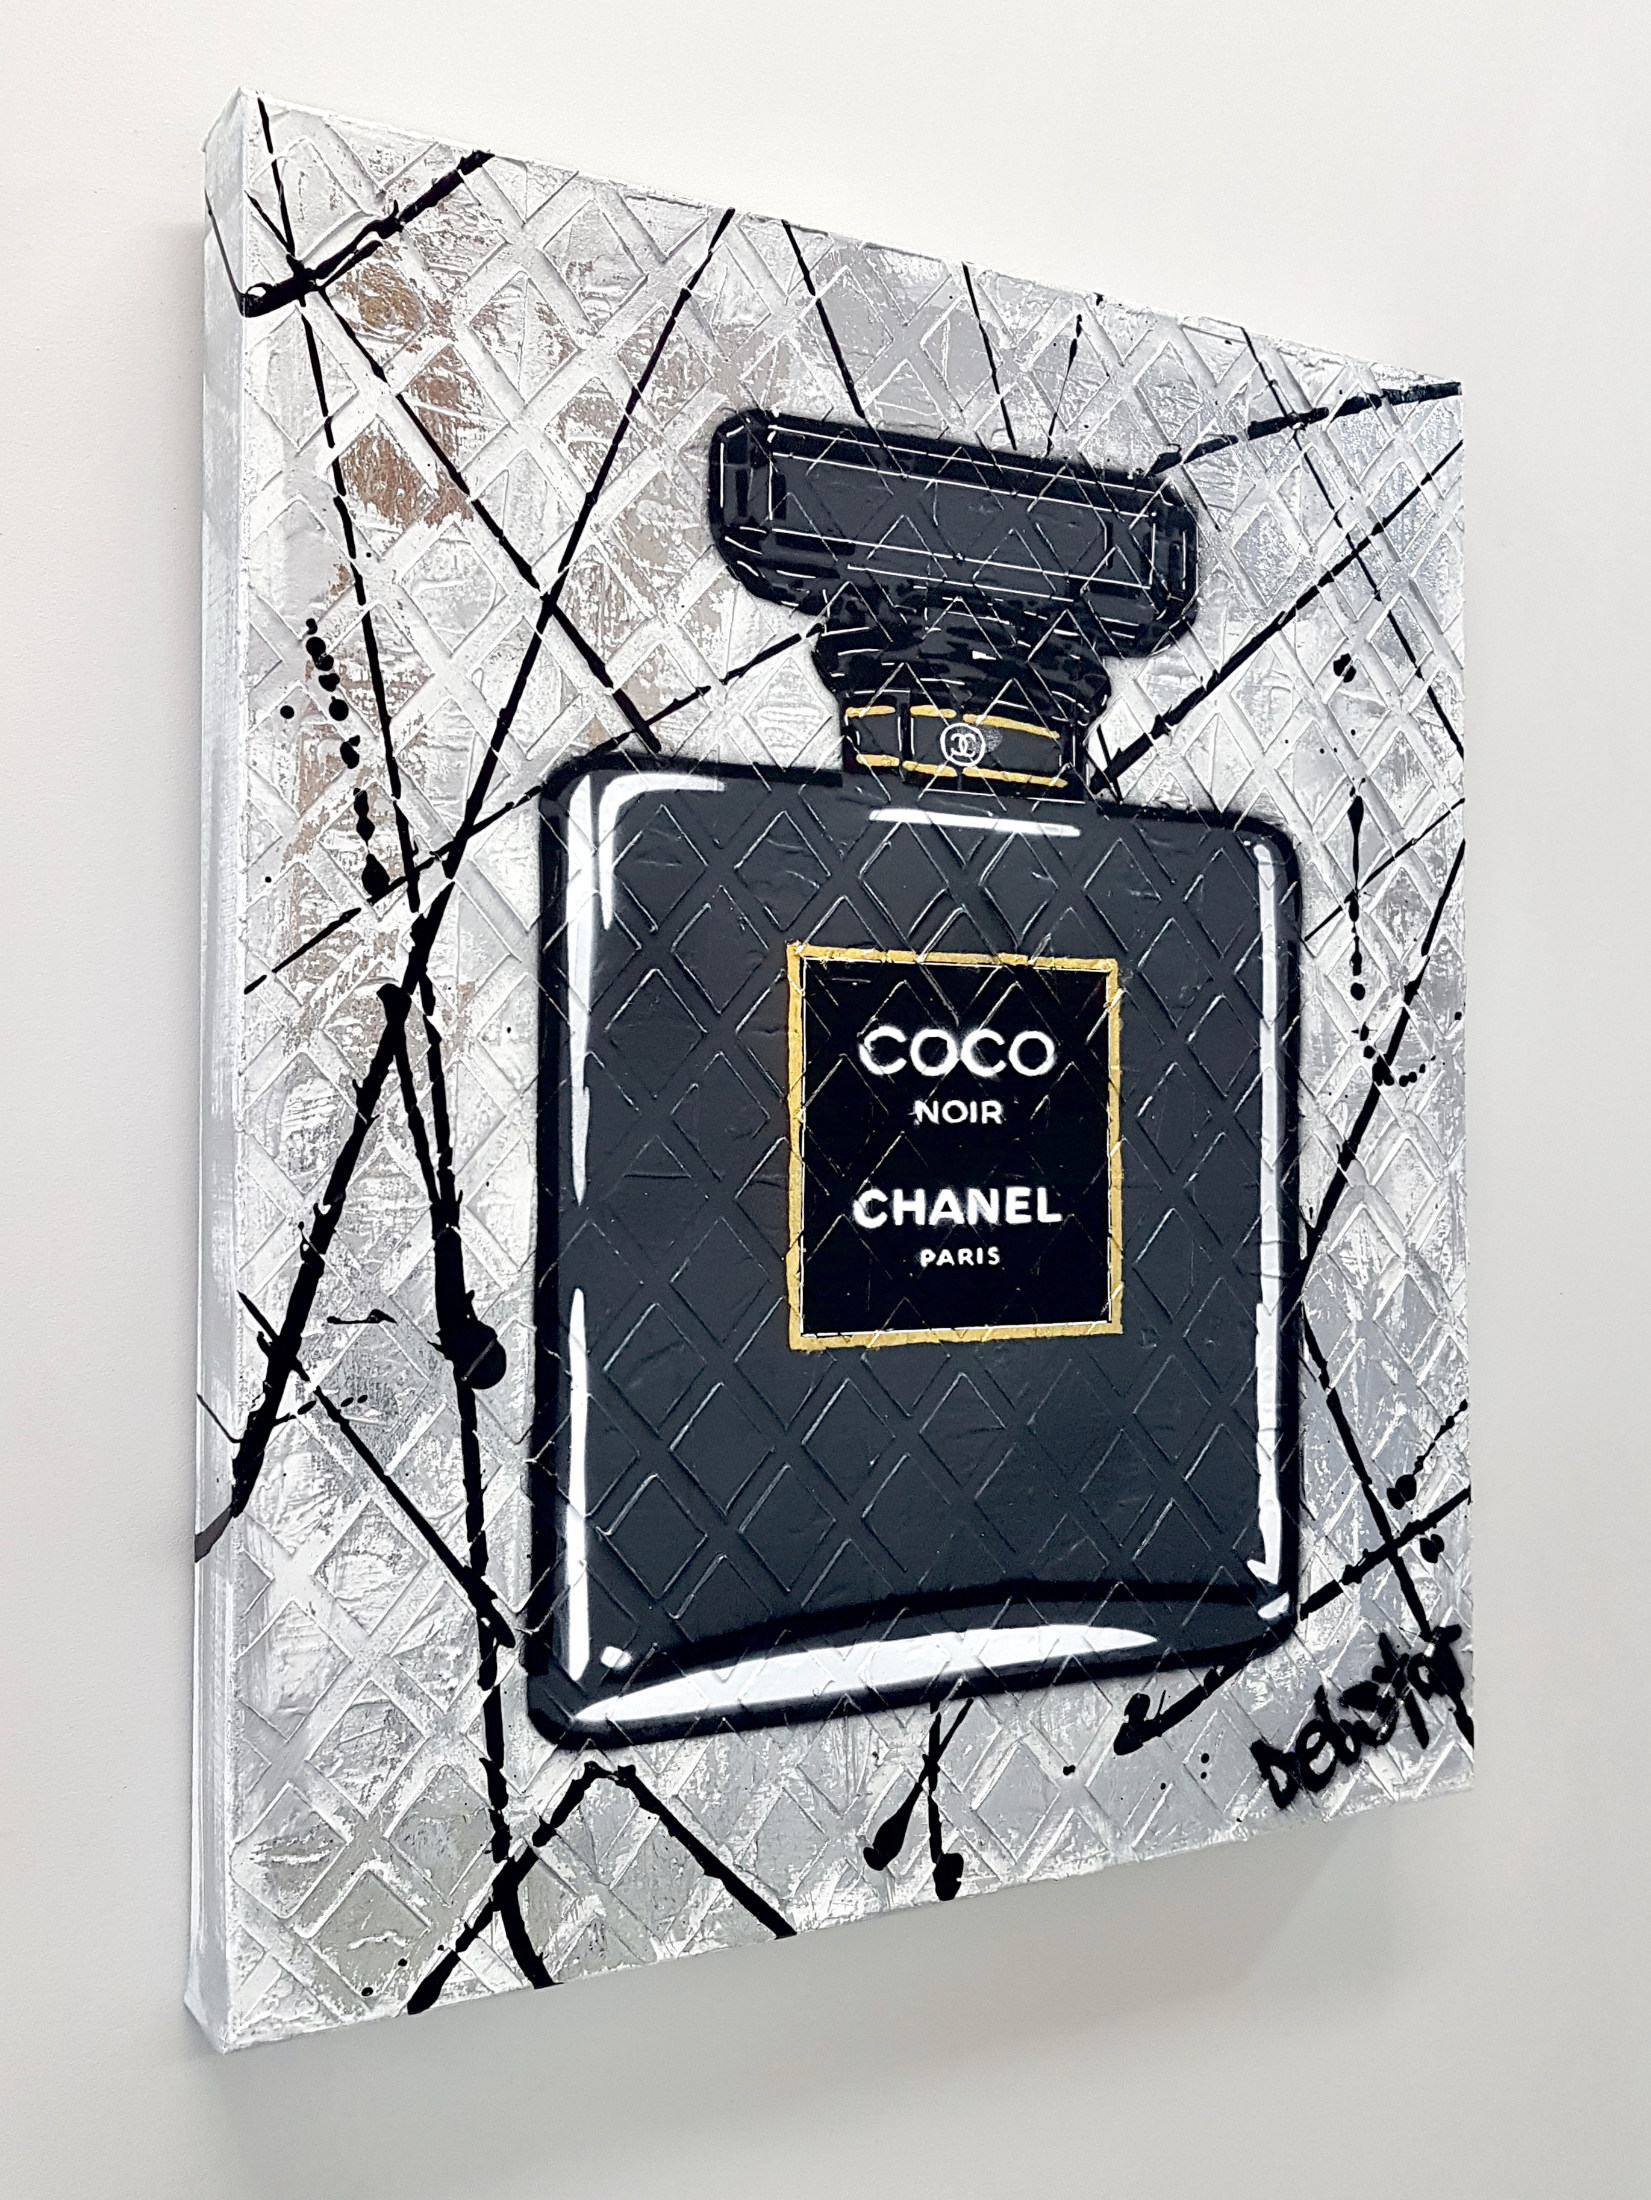 Chanel Coco Noir Perfume - Art Lovers Australia